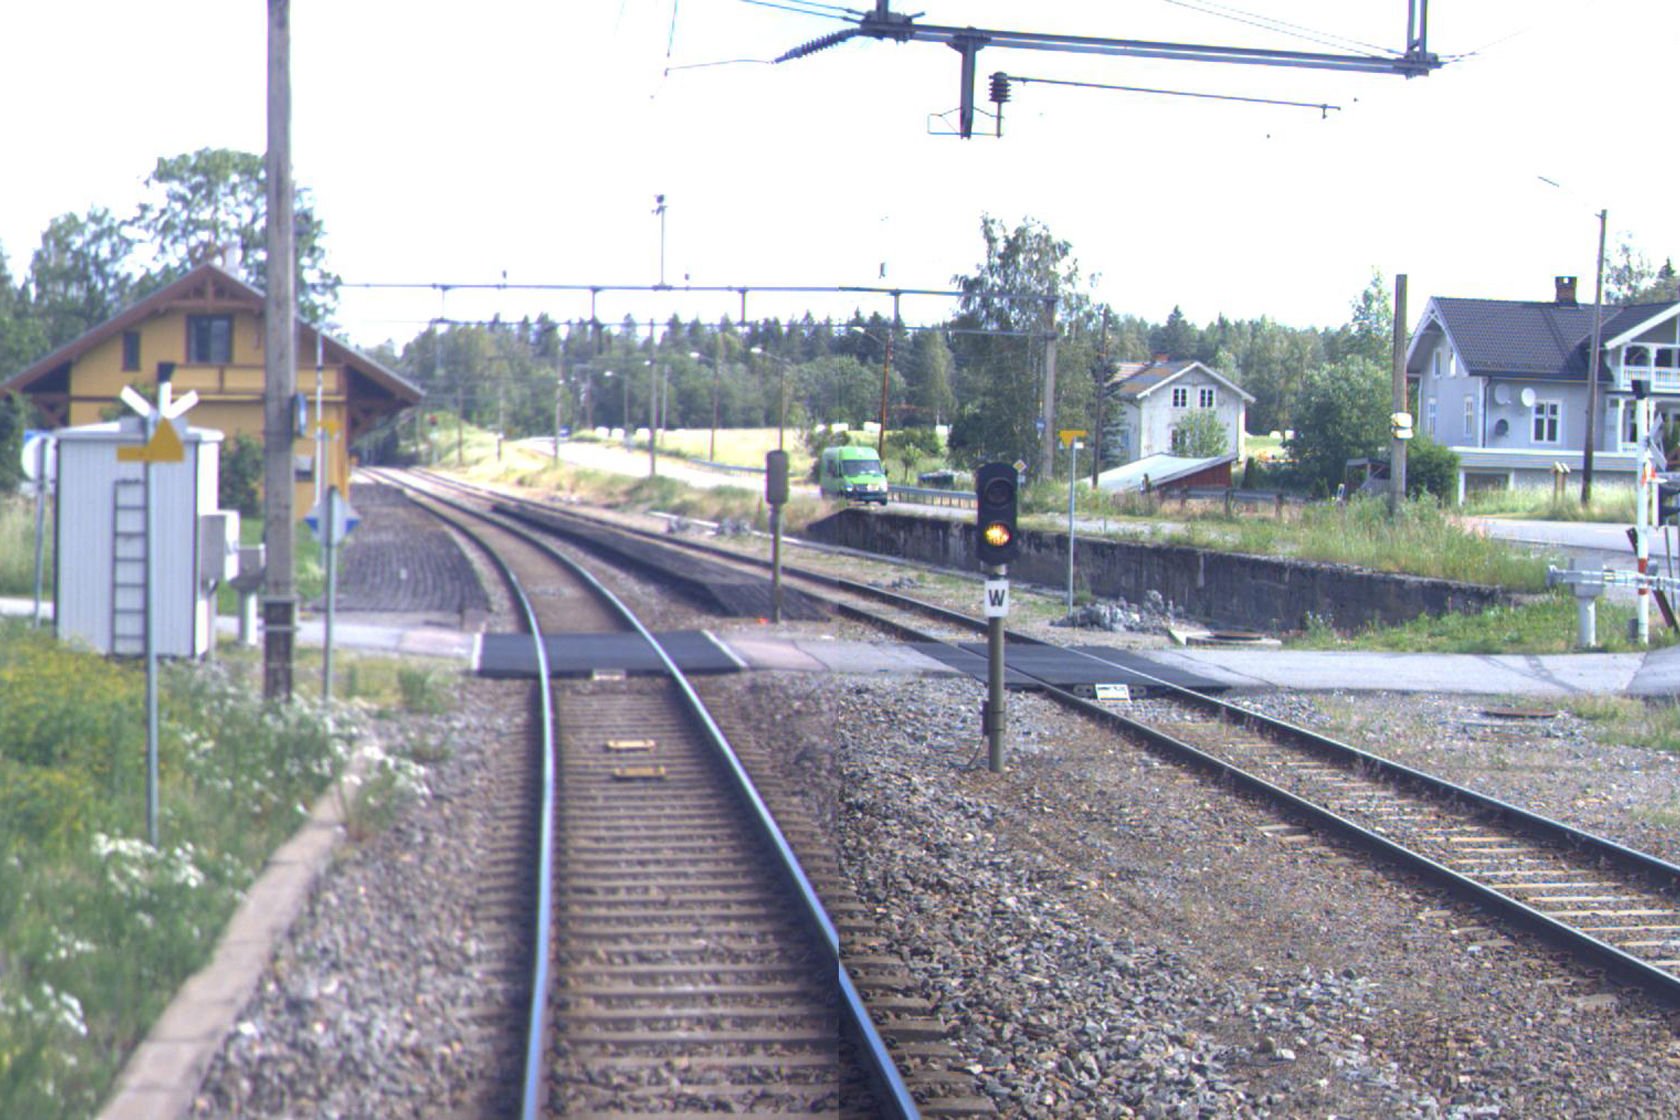 Tracks and building at Seterstøa station